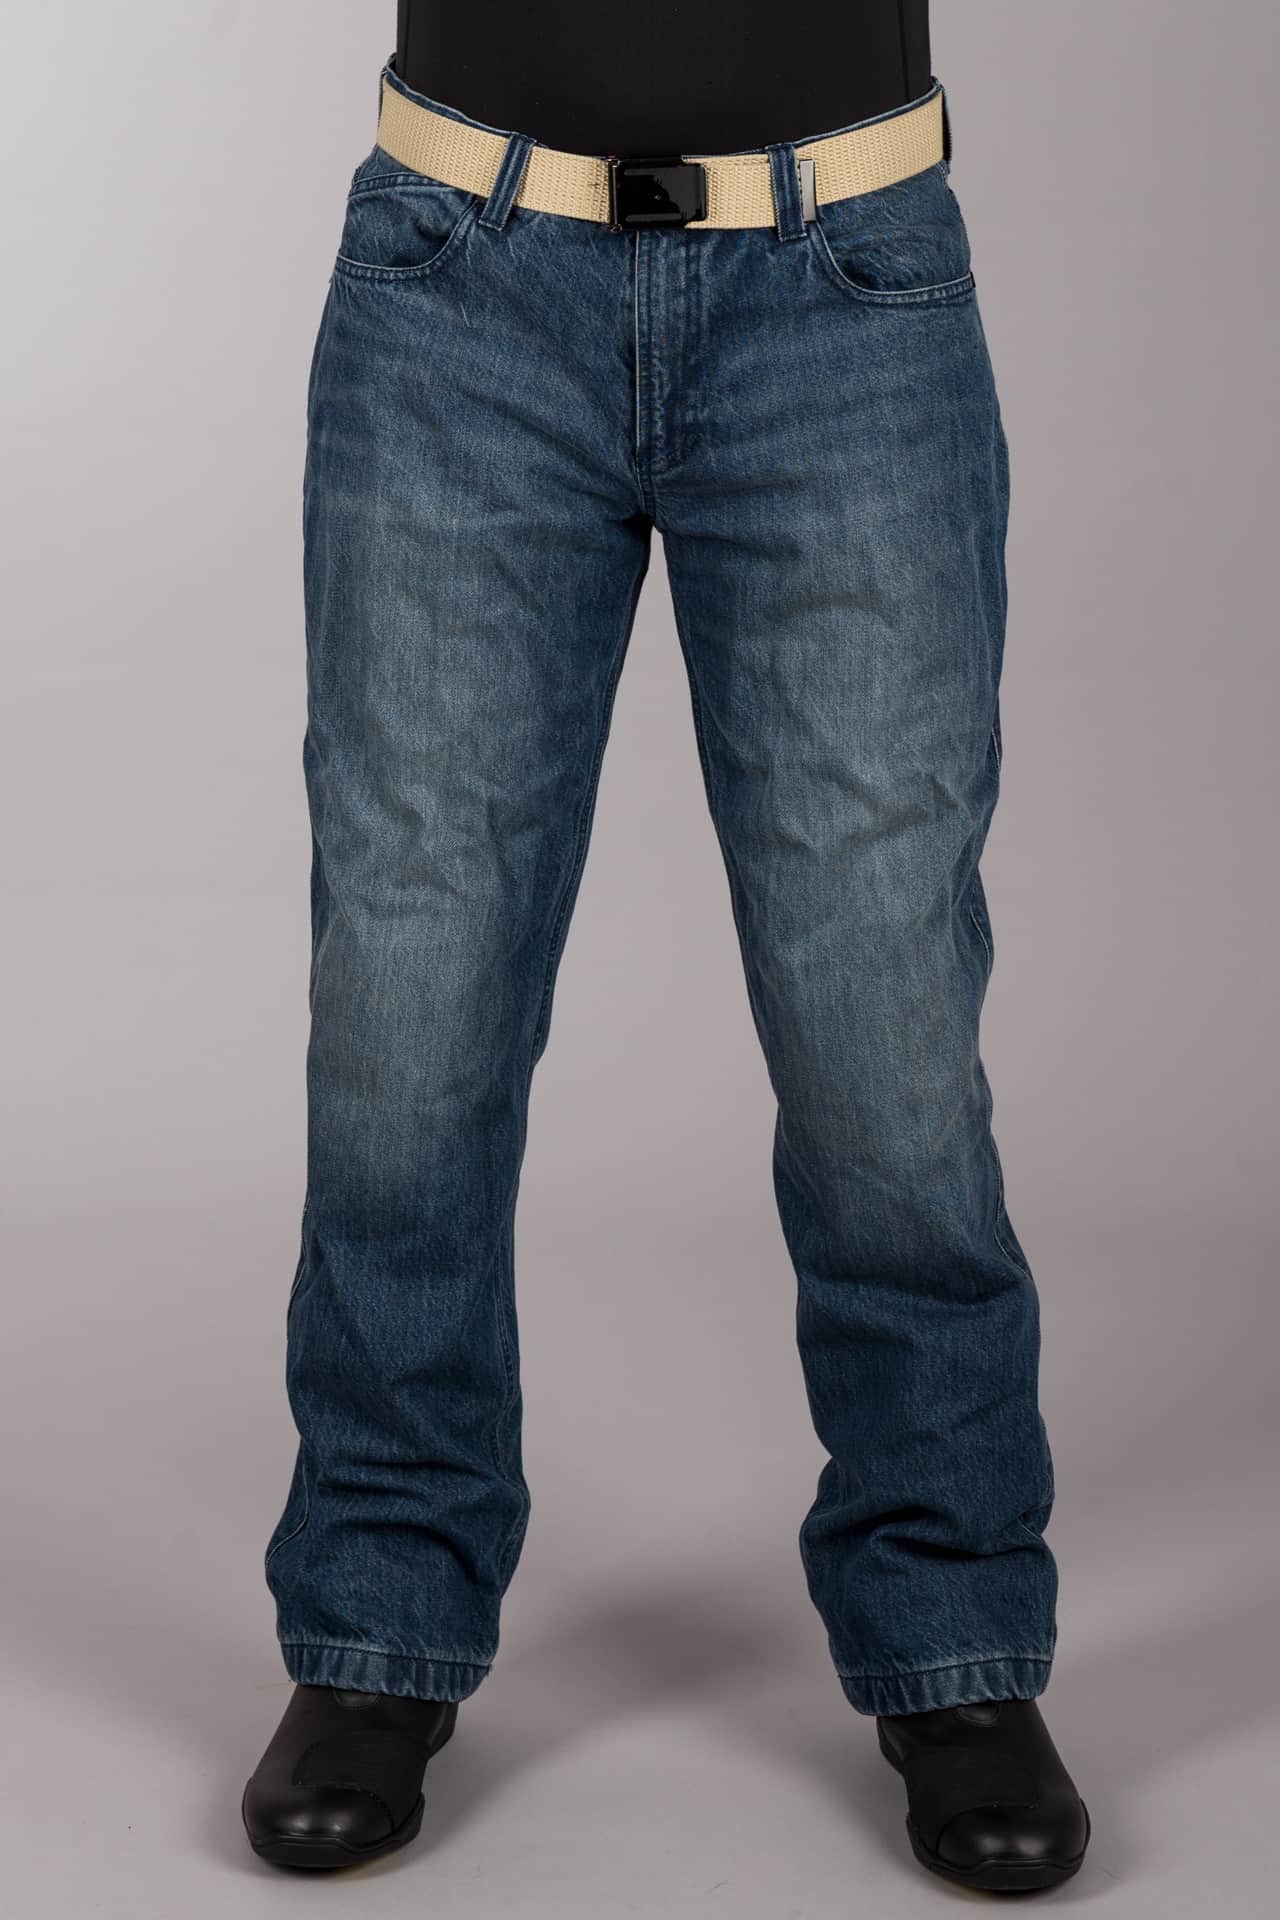 fm jeans price